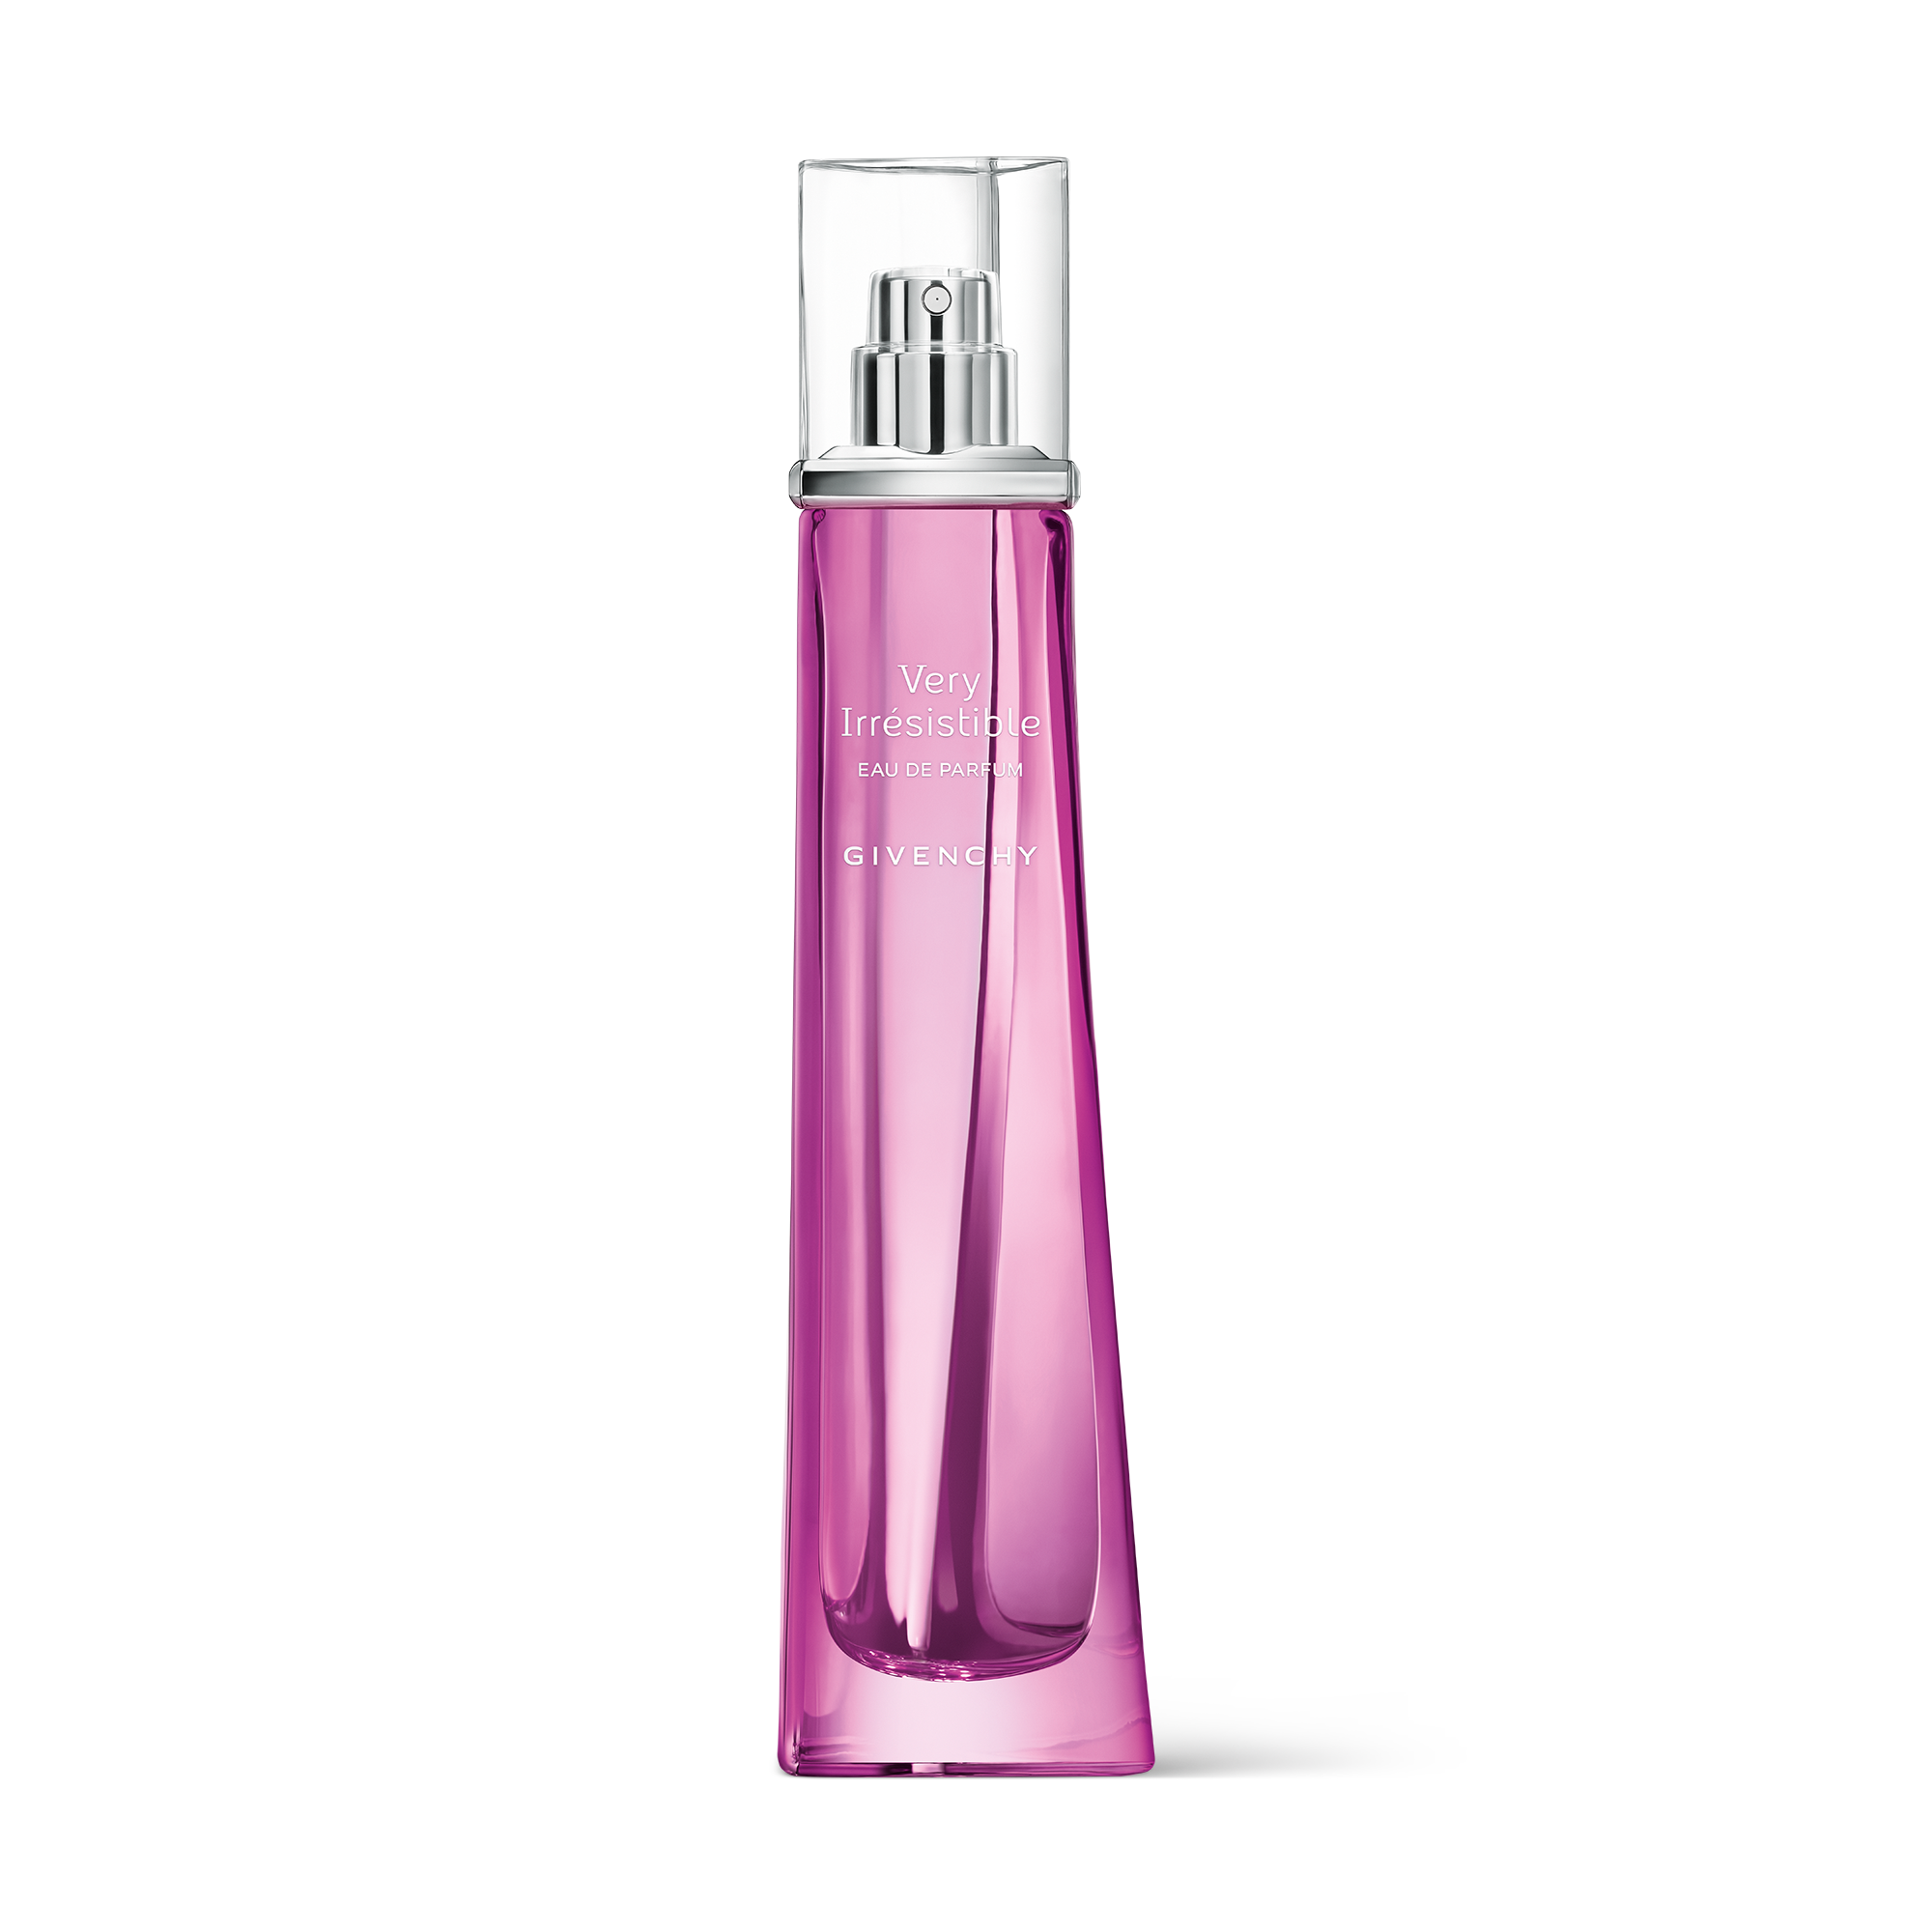 givenchy perfume purple bottle